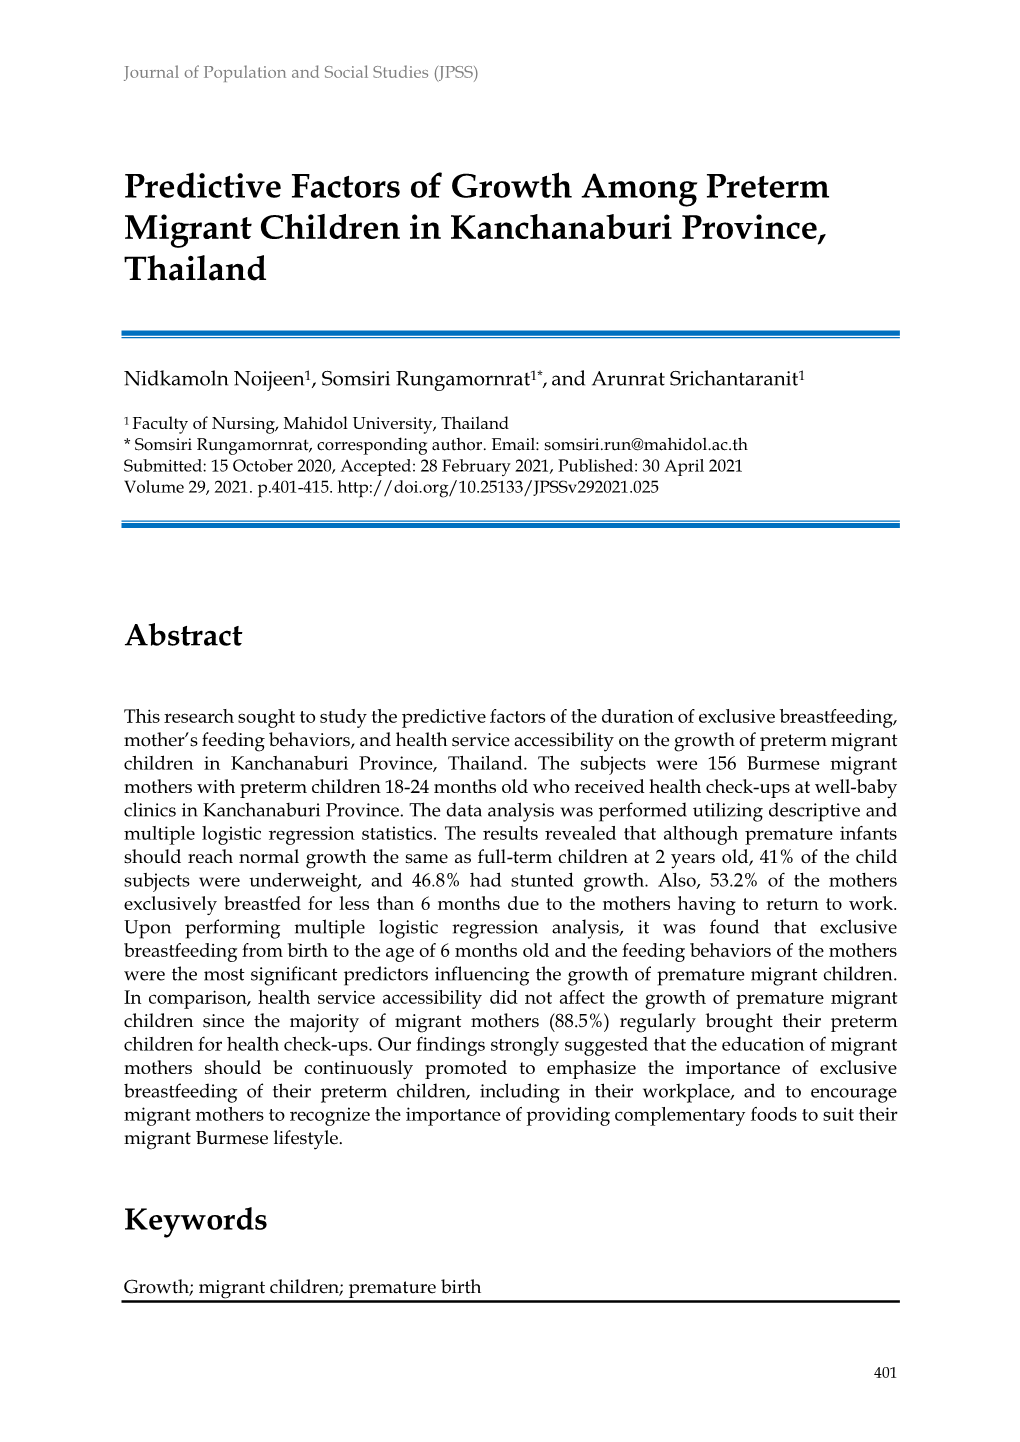 Predictive Factors of Growth Among Preterm Migrant Children in Kanchanaburi Province, Thailand